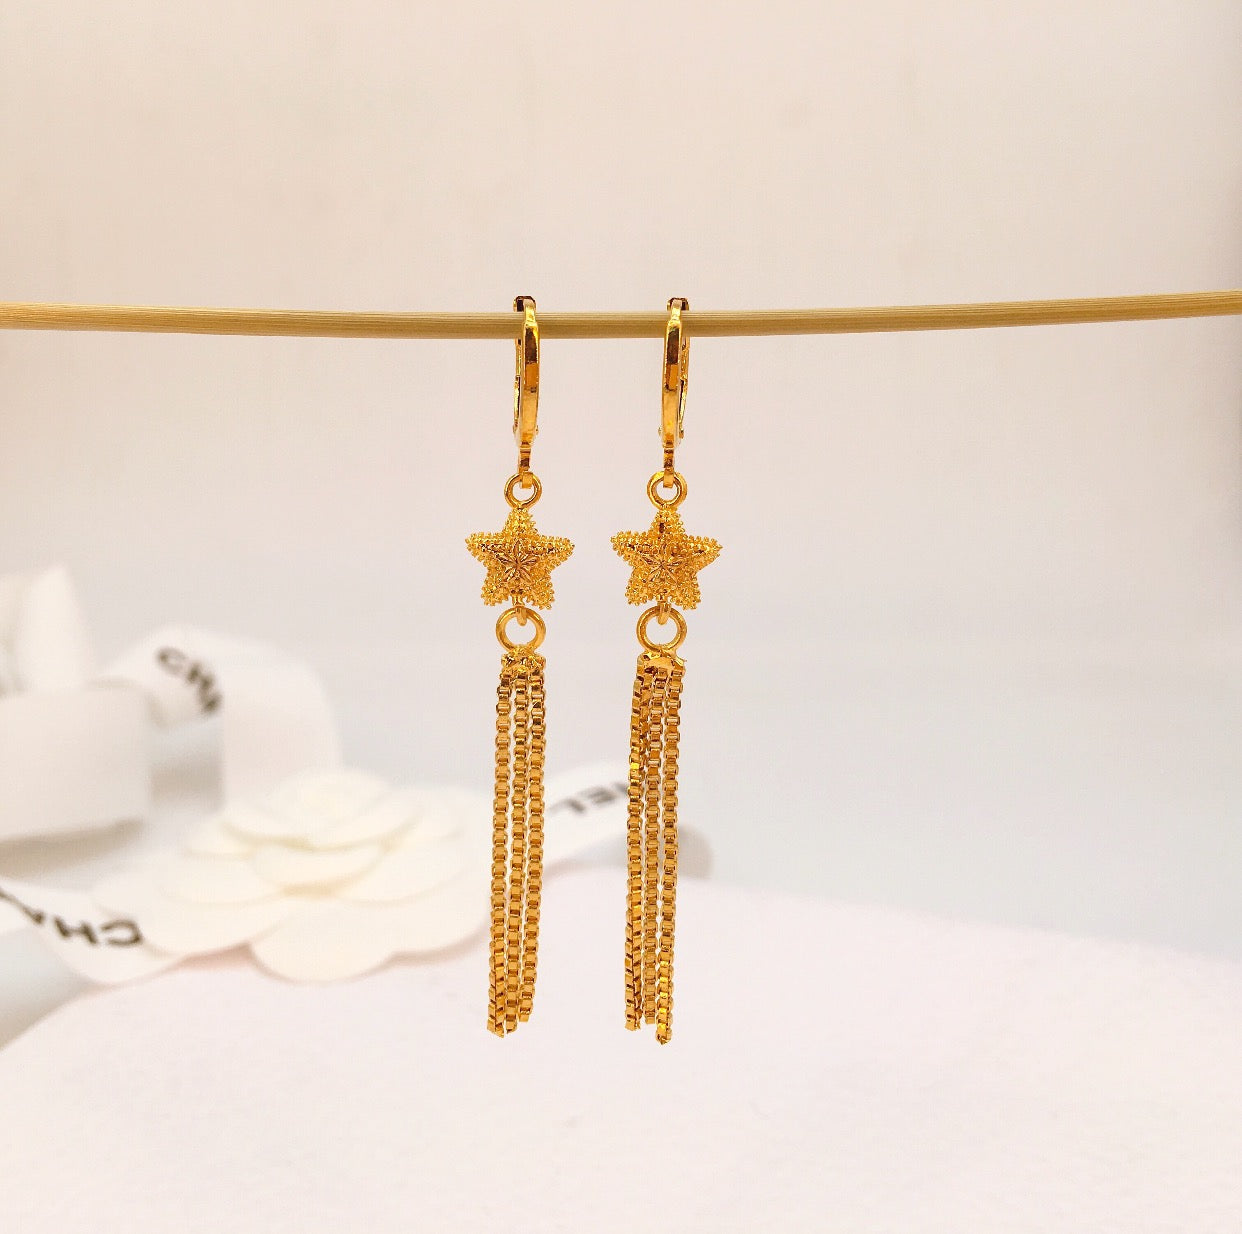 Genuine 100% 24K Bangkok Gold Floral Tassel Drop Earrings